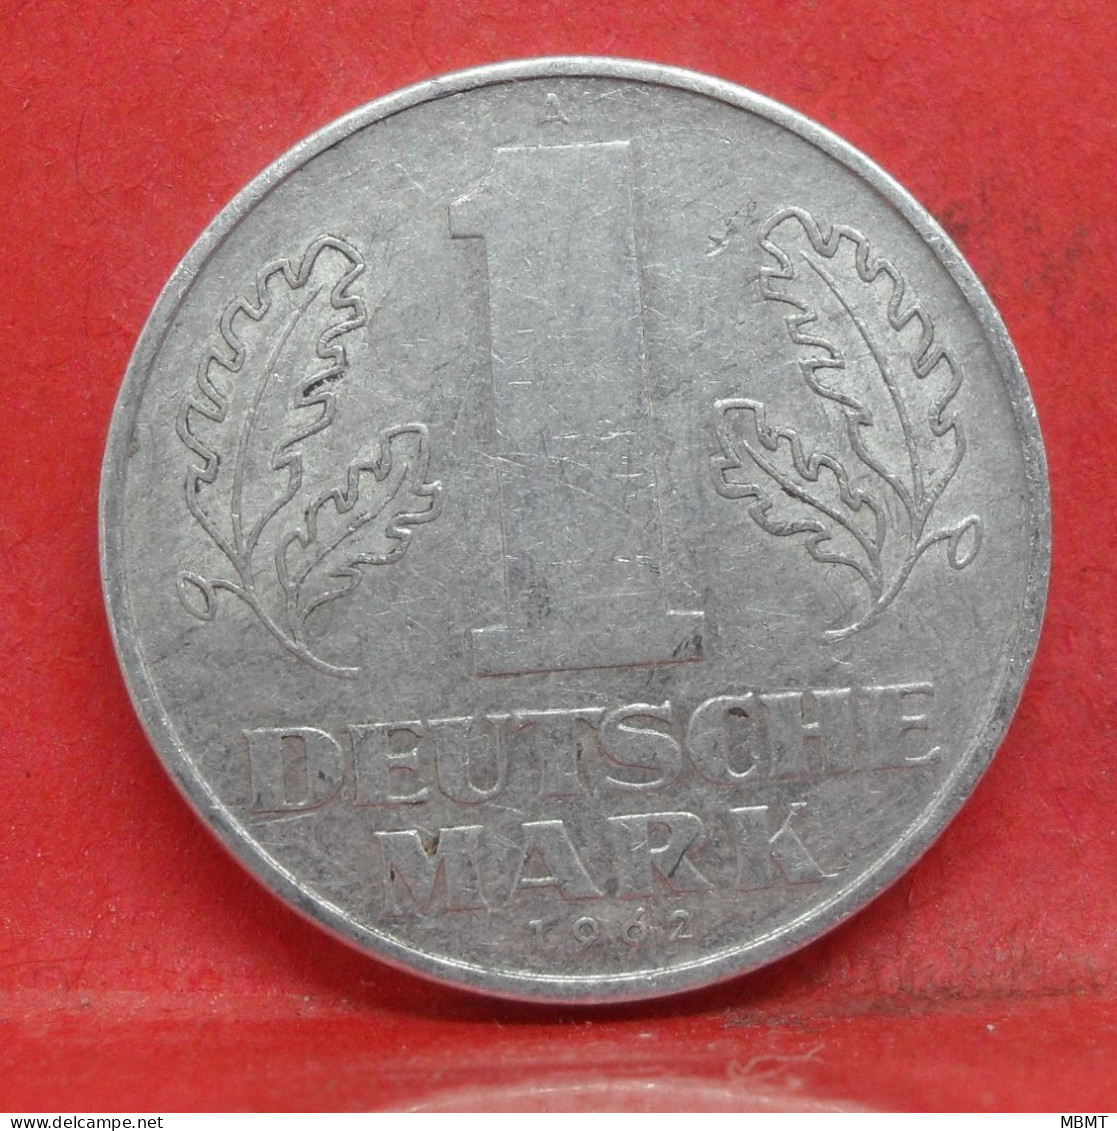 1 Mark 1962 A - TTB - Pièce Monnaie Allemagne - Article N°1560 - 1 Marco